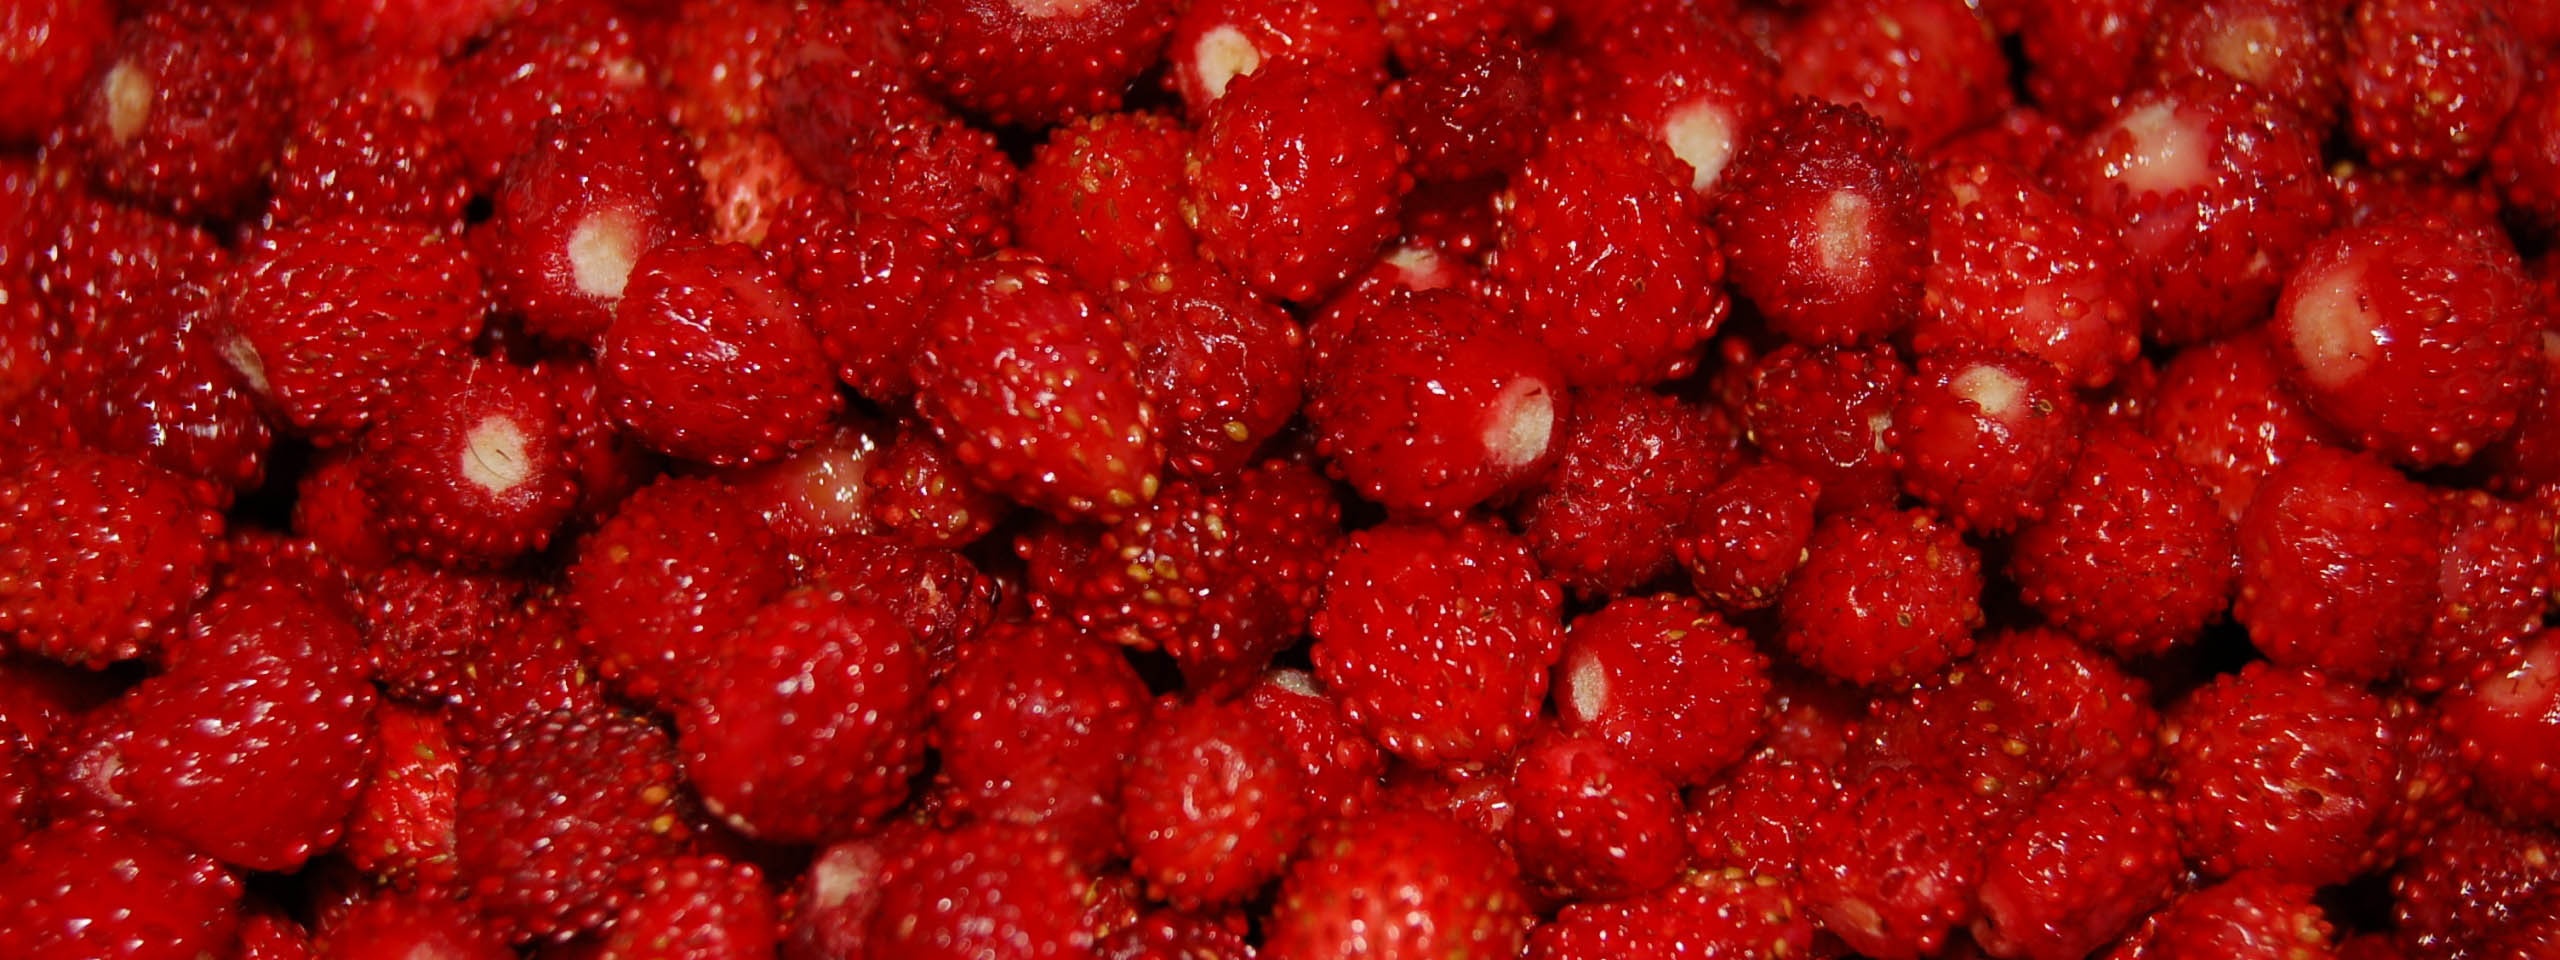 Small Strawberries